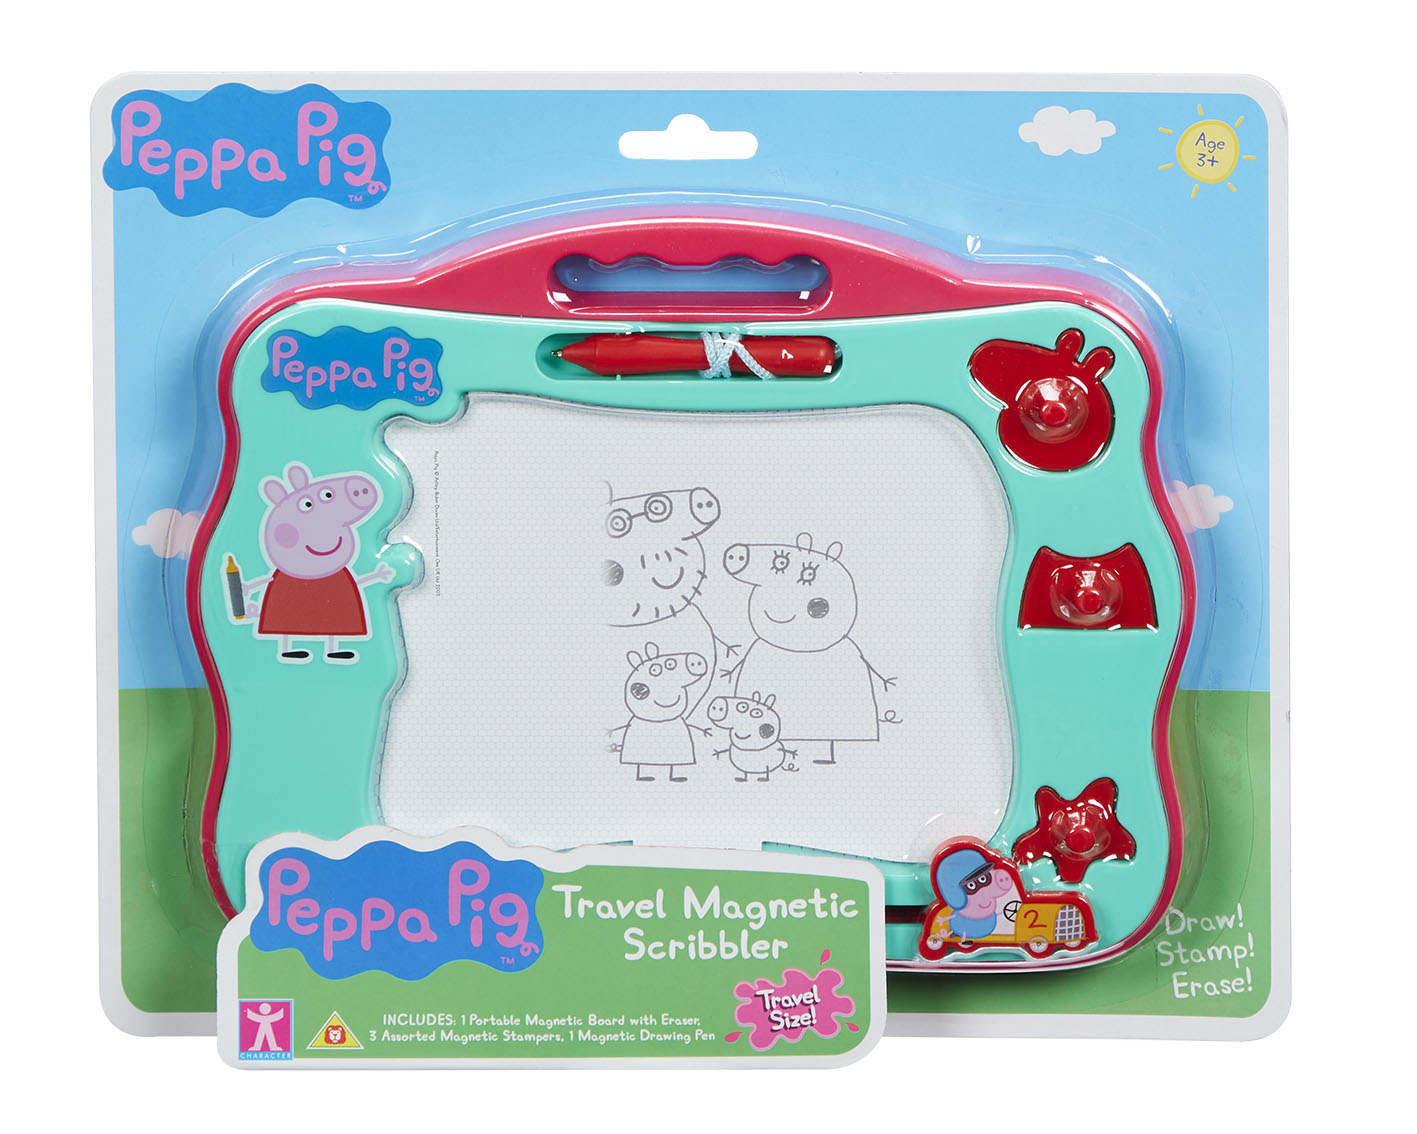 Peppa Pig’s Travel Magnetic Scribbler